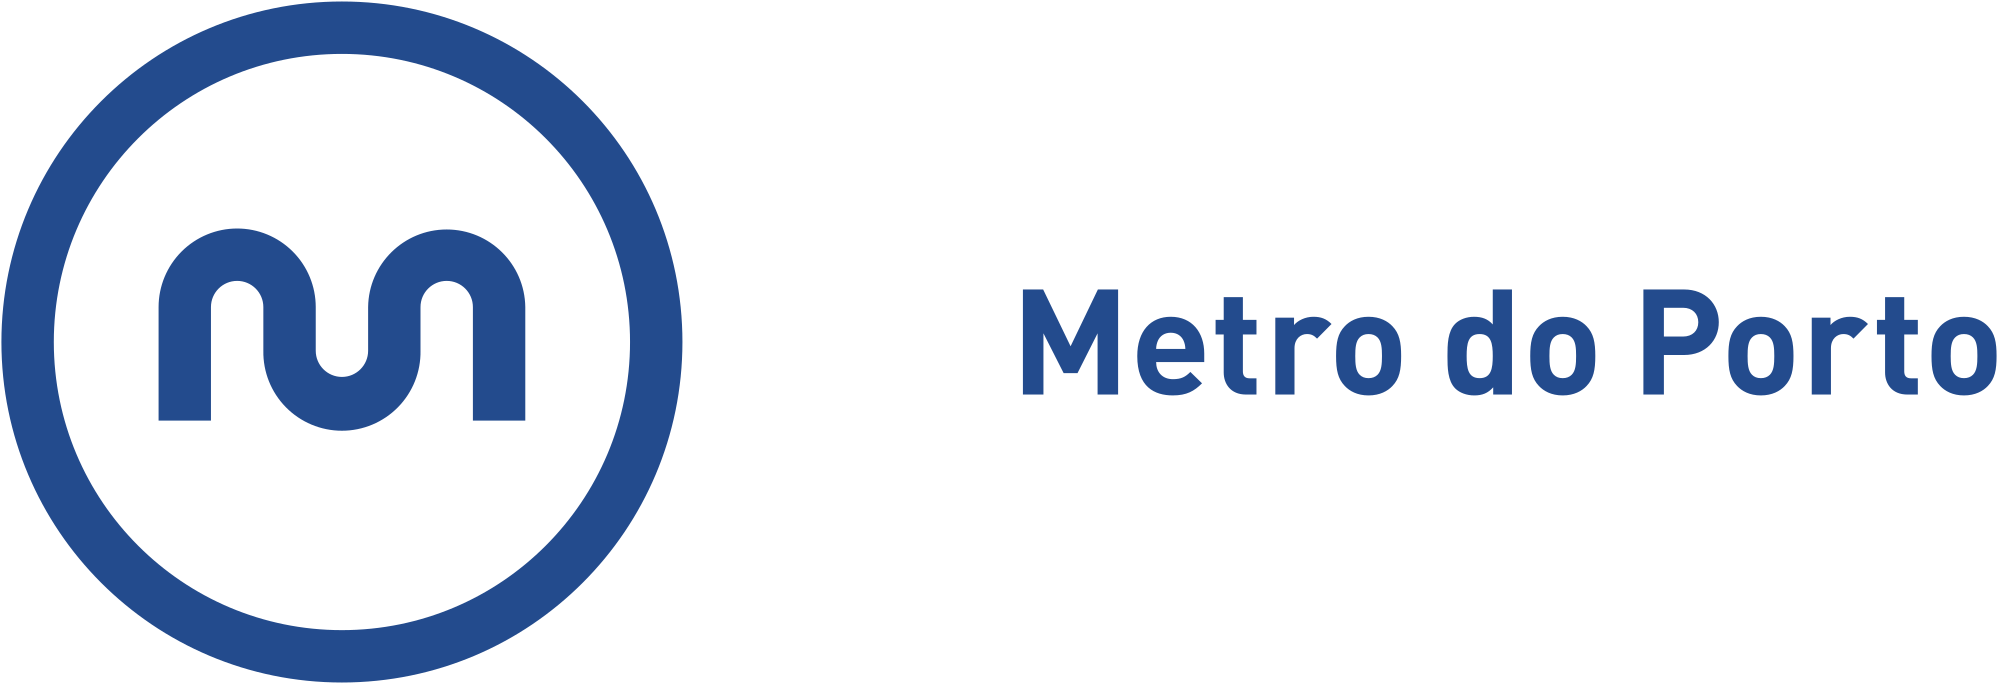 Metro Do Porto Logo Png Transparent - Metro Do Porto Logo Png (2400x2400), Png Download